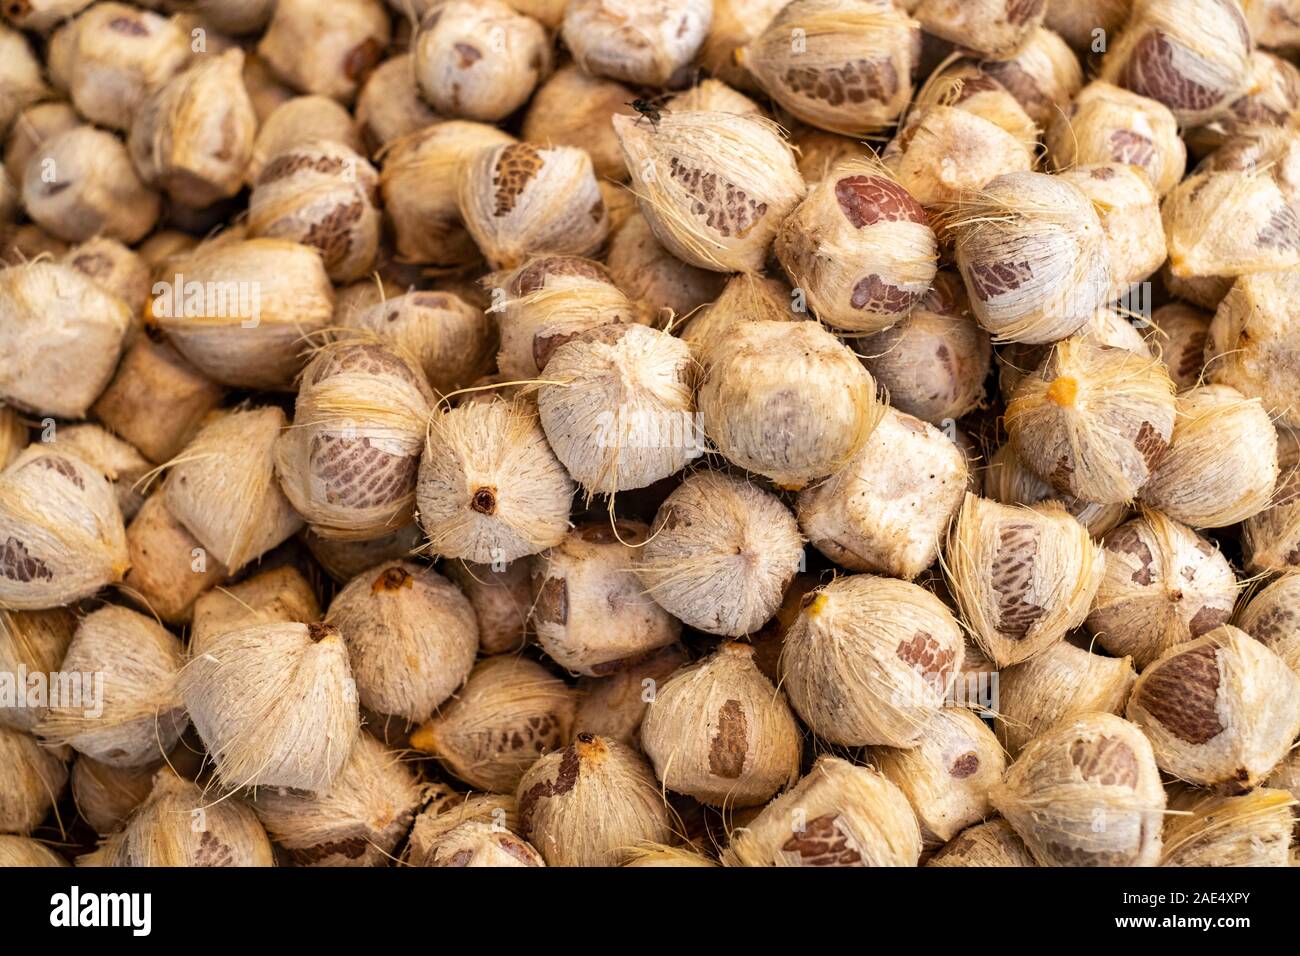 Betel nut or areca nut (paan) from the areca palm found arranged artfully in a Burmese market in Mandalay, Myanmar (Burma) Stock Photo